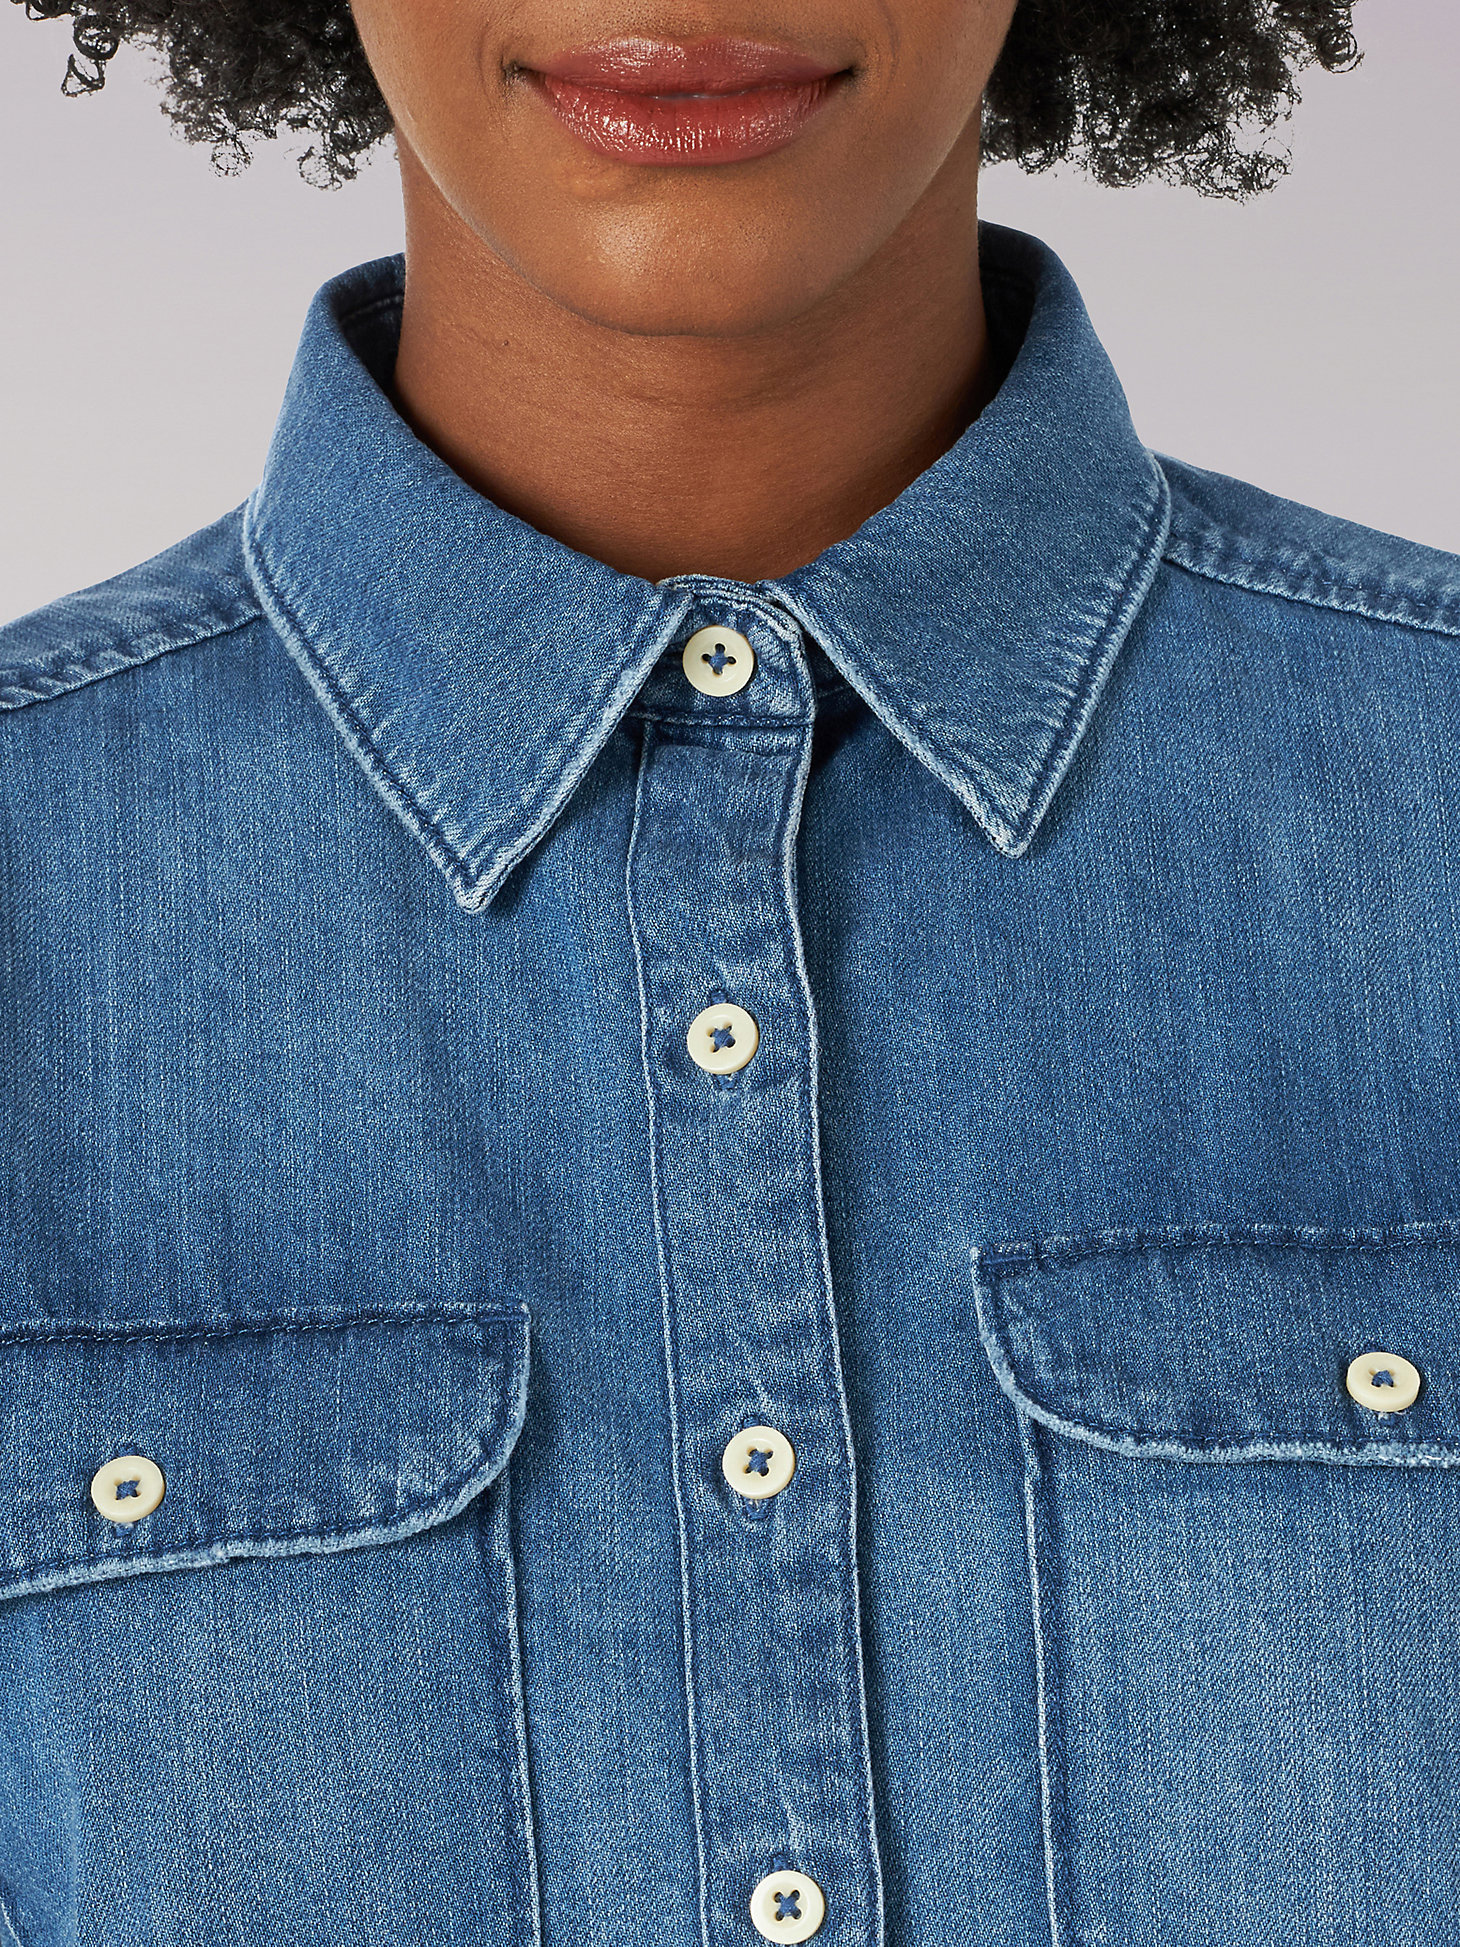 Women's Vintage Modern Frontier Classic Button Down Shirt in Light Wash alternative view 2